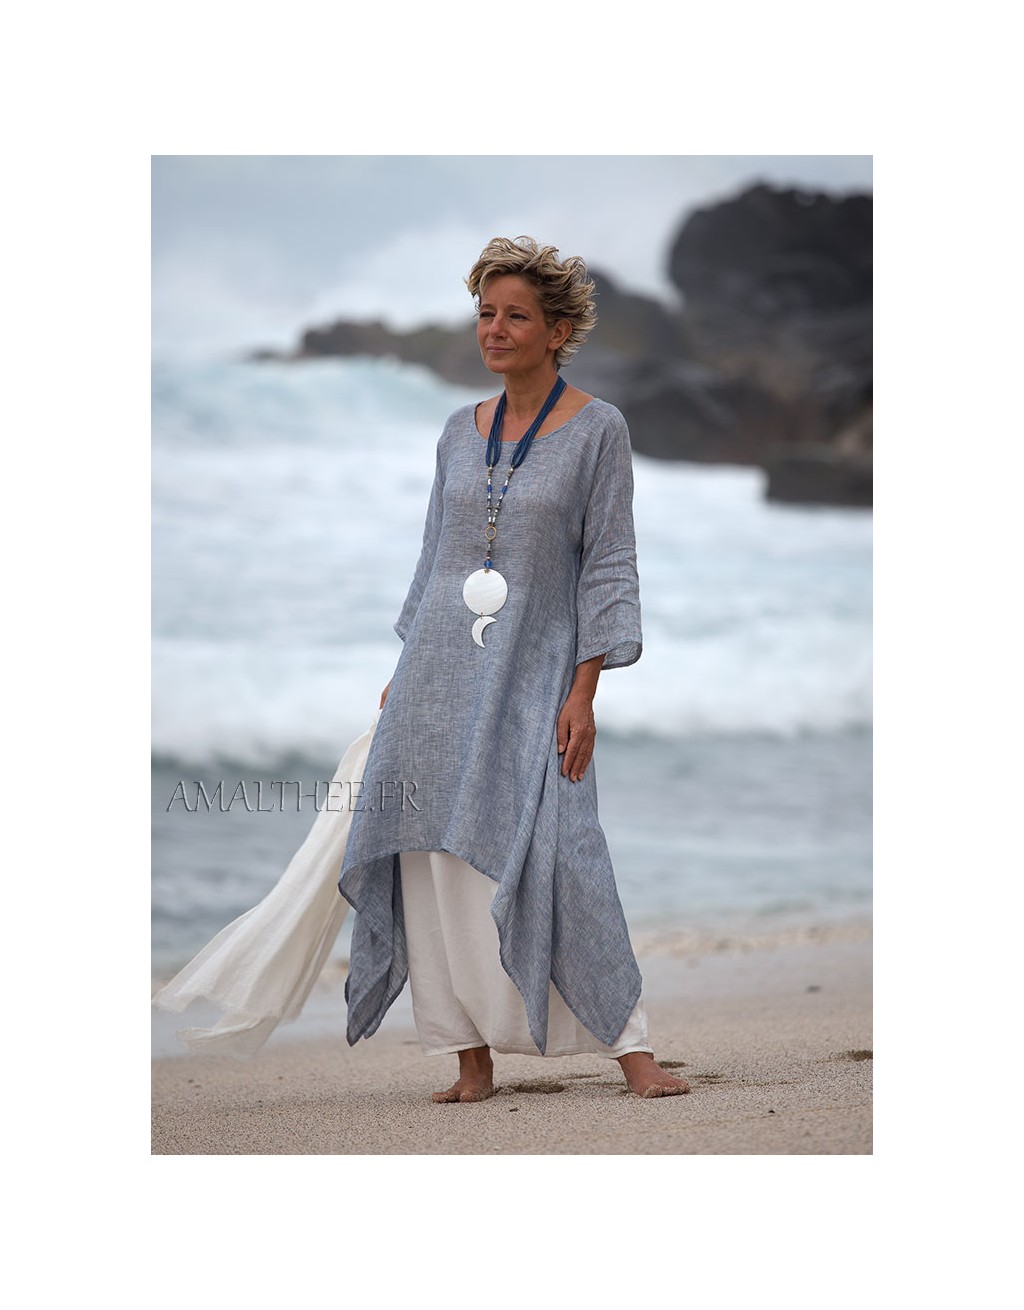 Blue linen gauze tunic with white sarouel skirt